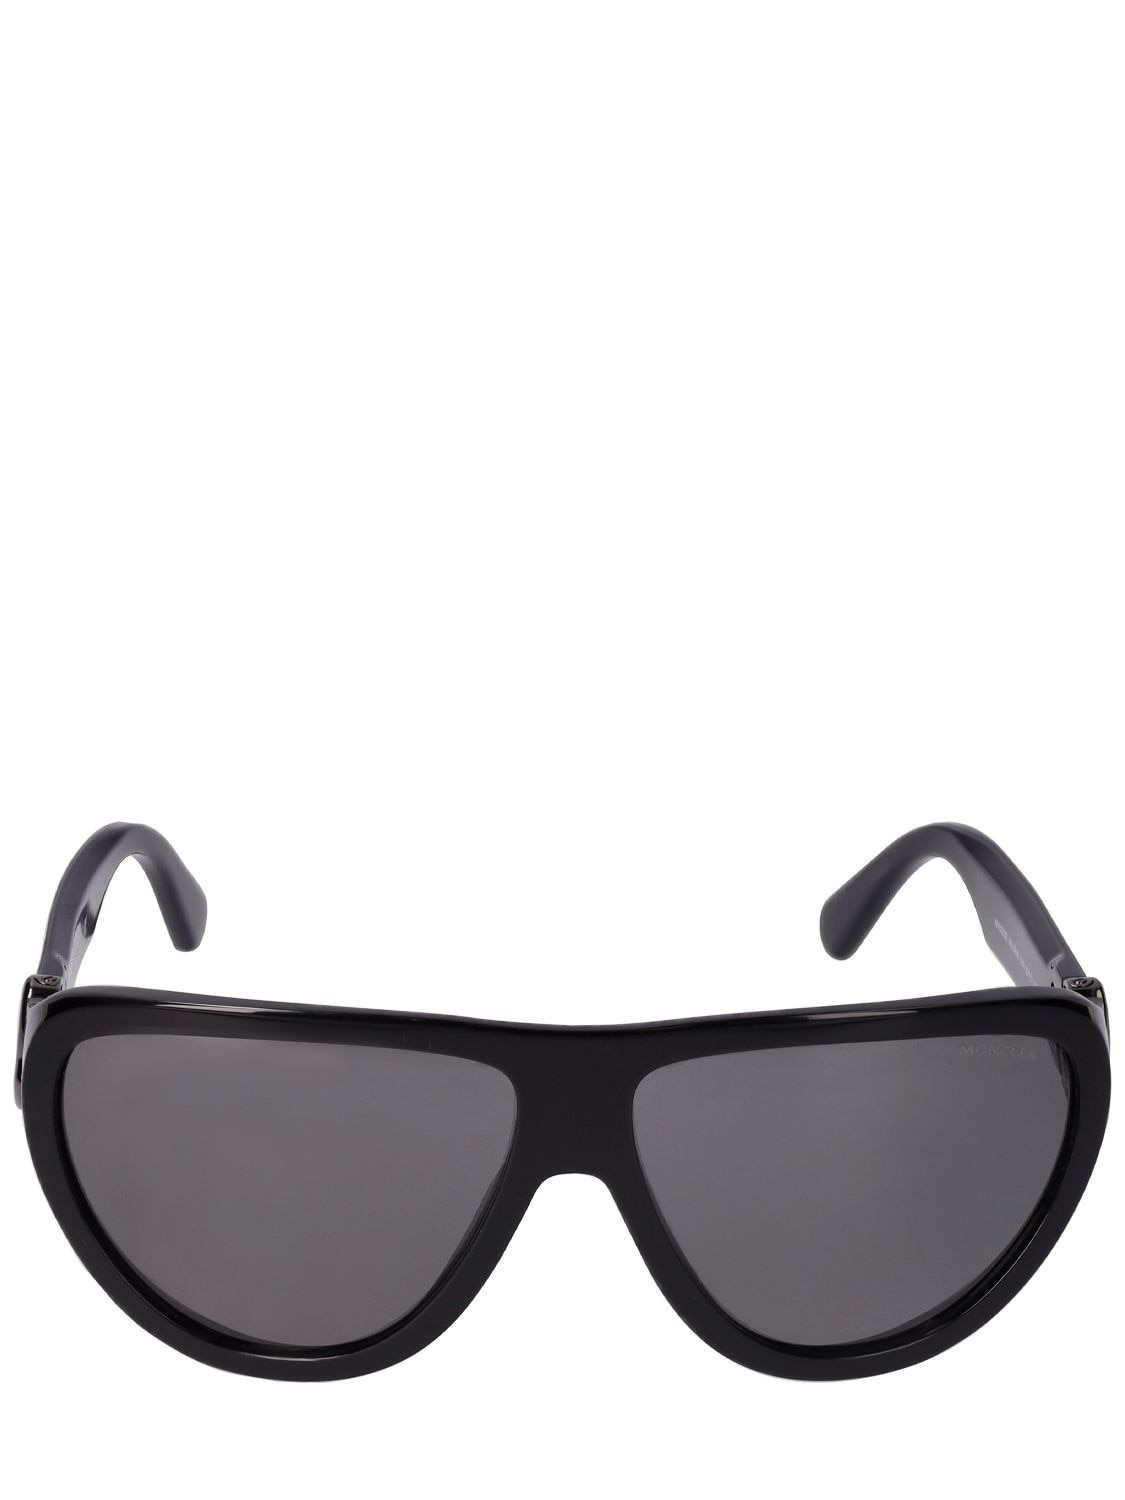 Image of Anodize Bold Aviator Sunglasses